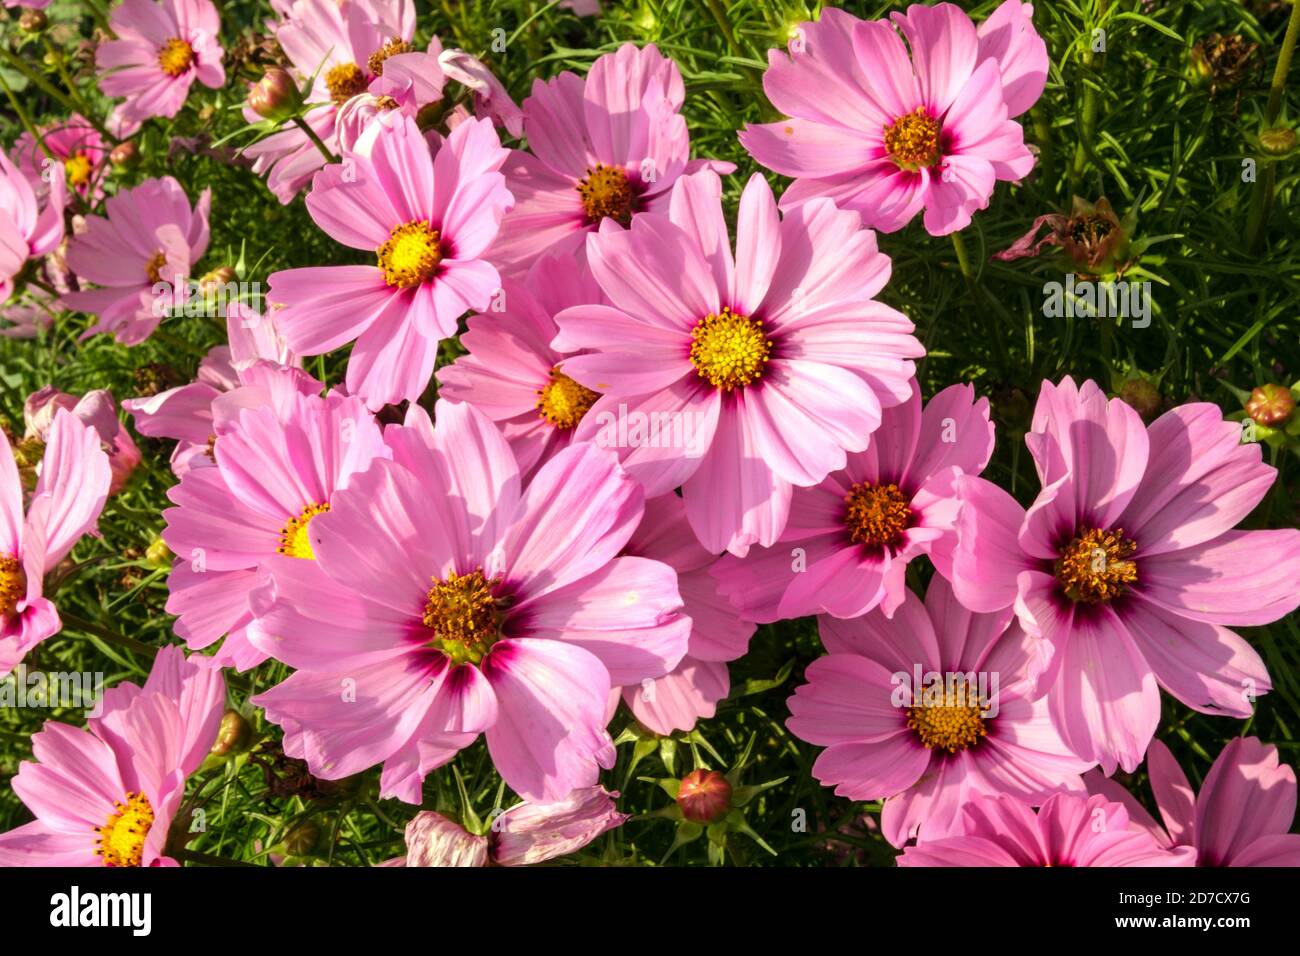 Mexikanische Aster Blume Cosmos bipinnatus Sonata Rosa Blumen Cosmos Blumen Garten Stockfoto